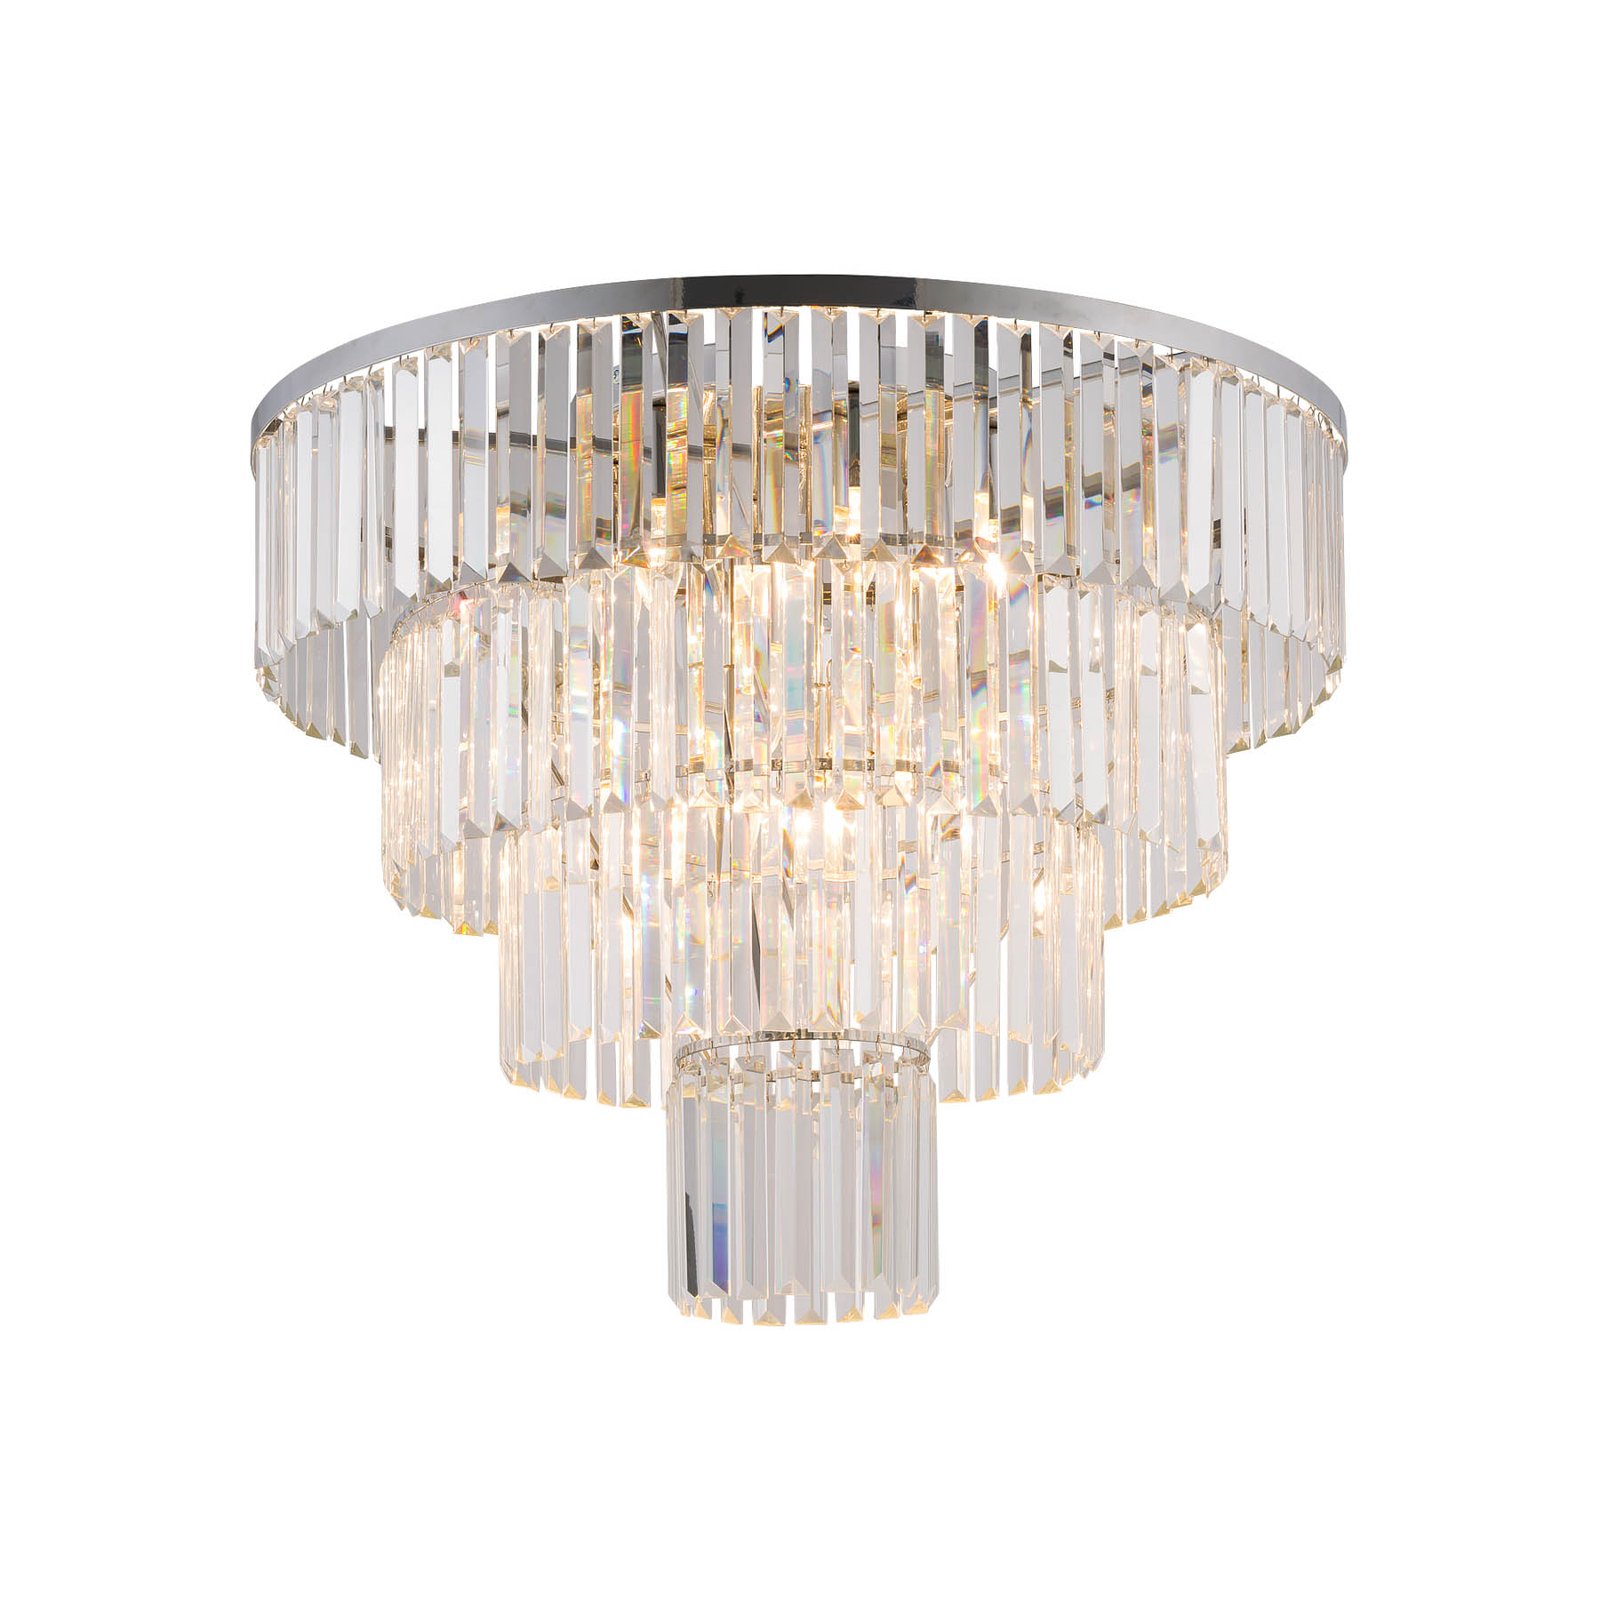 Cristal plafondlamp, transparant/zilver, Ø 71cm